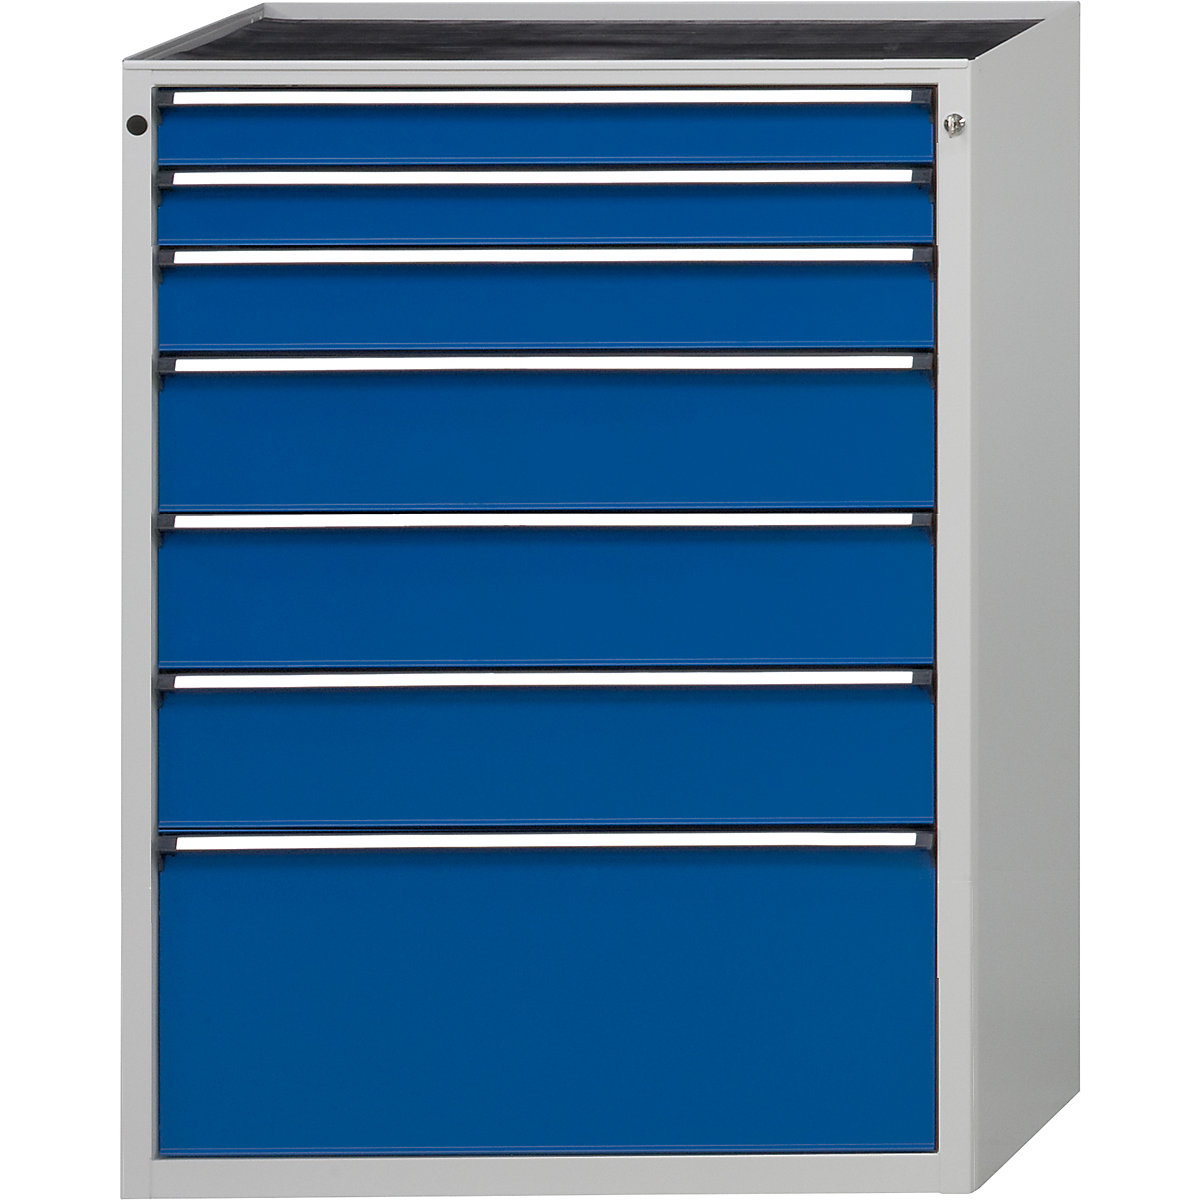 ANKE – Armoire à tiroirs, l x p 910 x 675 mm, 7 tiroirs, hauteur 1280 mm, façade bleu gentiane